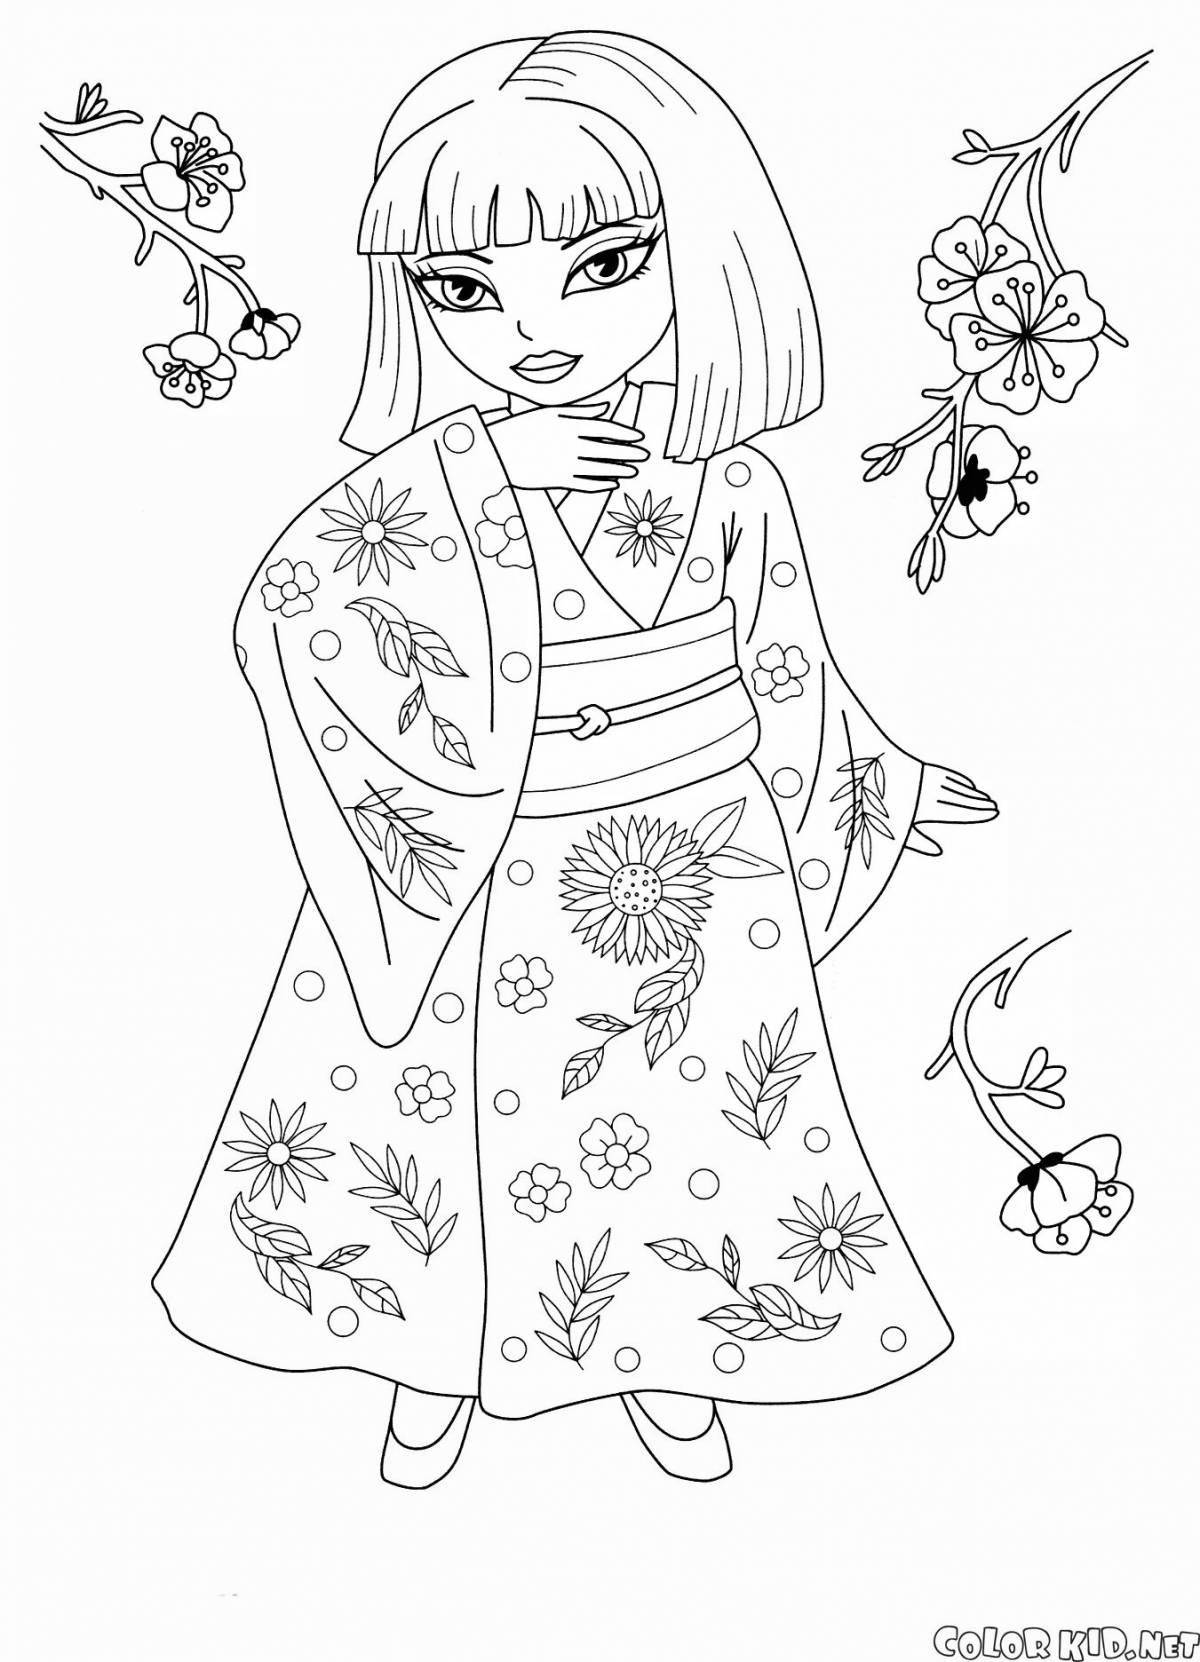 Adorable Japanese kimono coloring book for kids